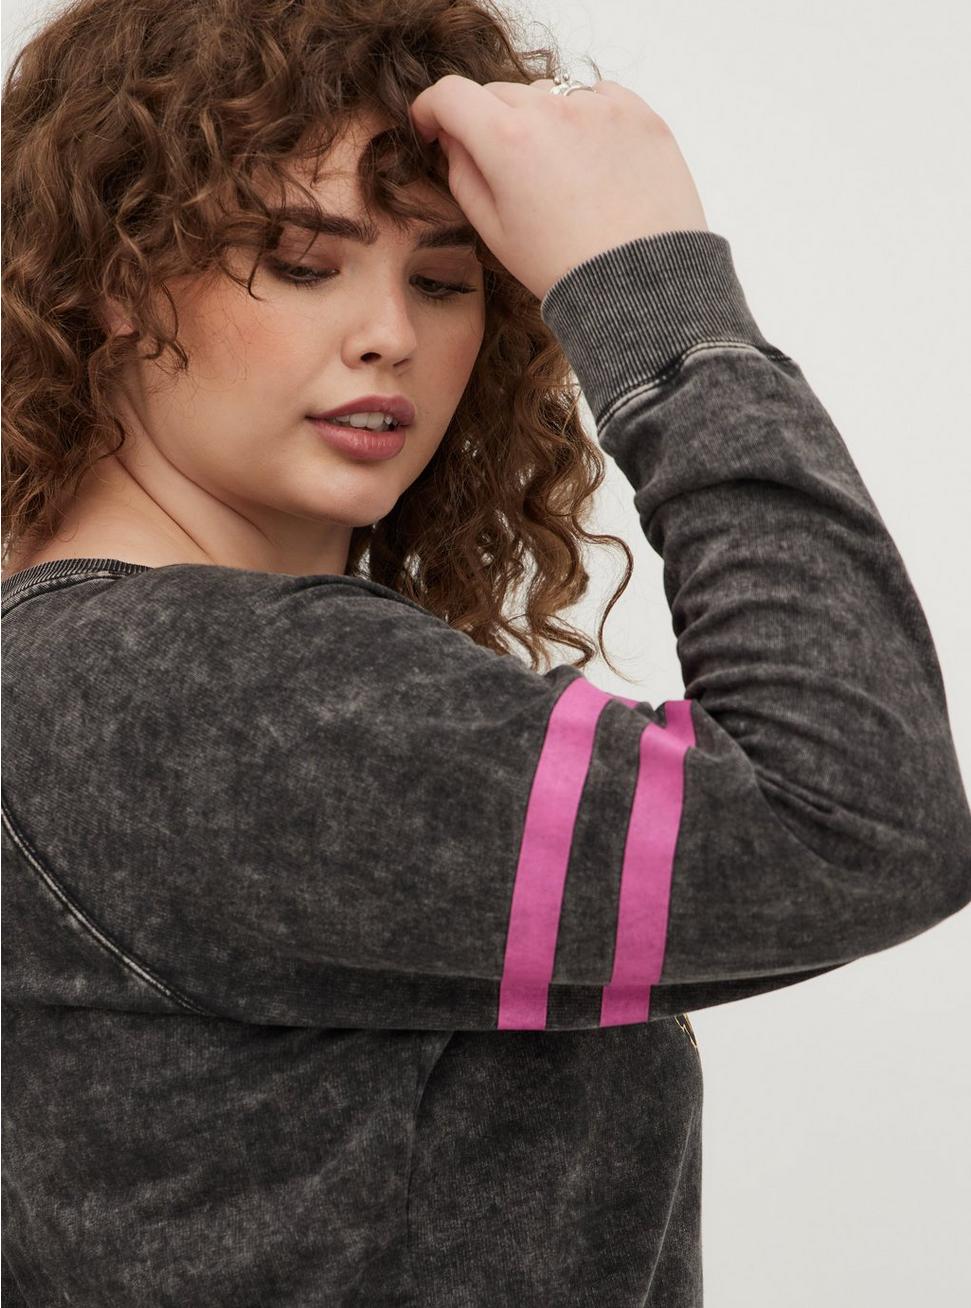 Plus Size LoveSick Raglan Sweatshirt - Everyday Fleece Pink Rock Star Black, DEEP BLACK, alternate